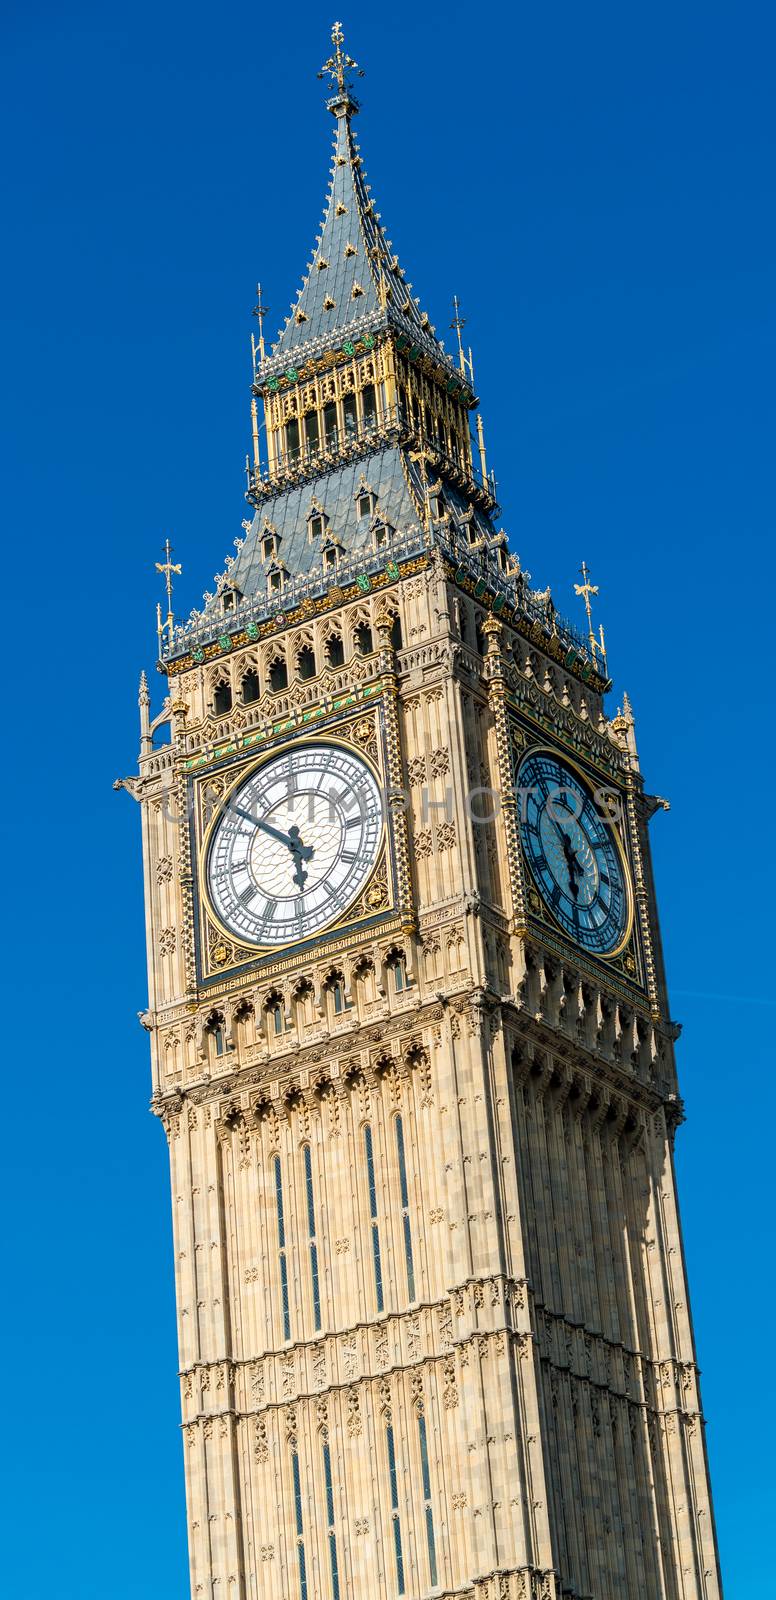 The Big Ben, London by jovannig